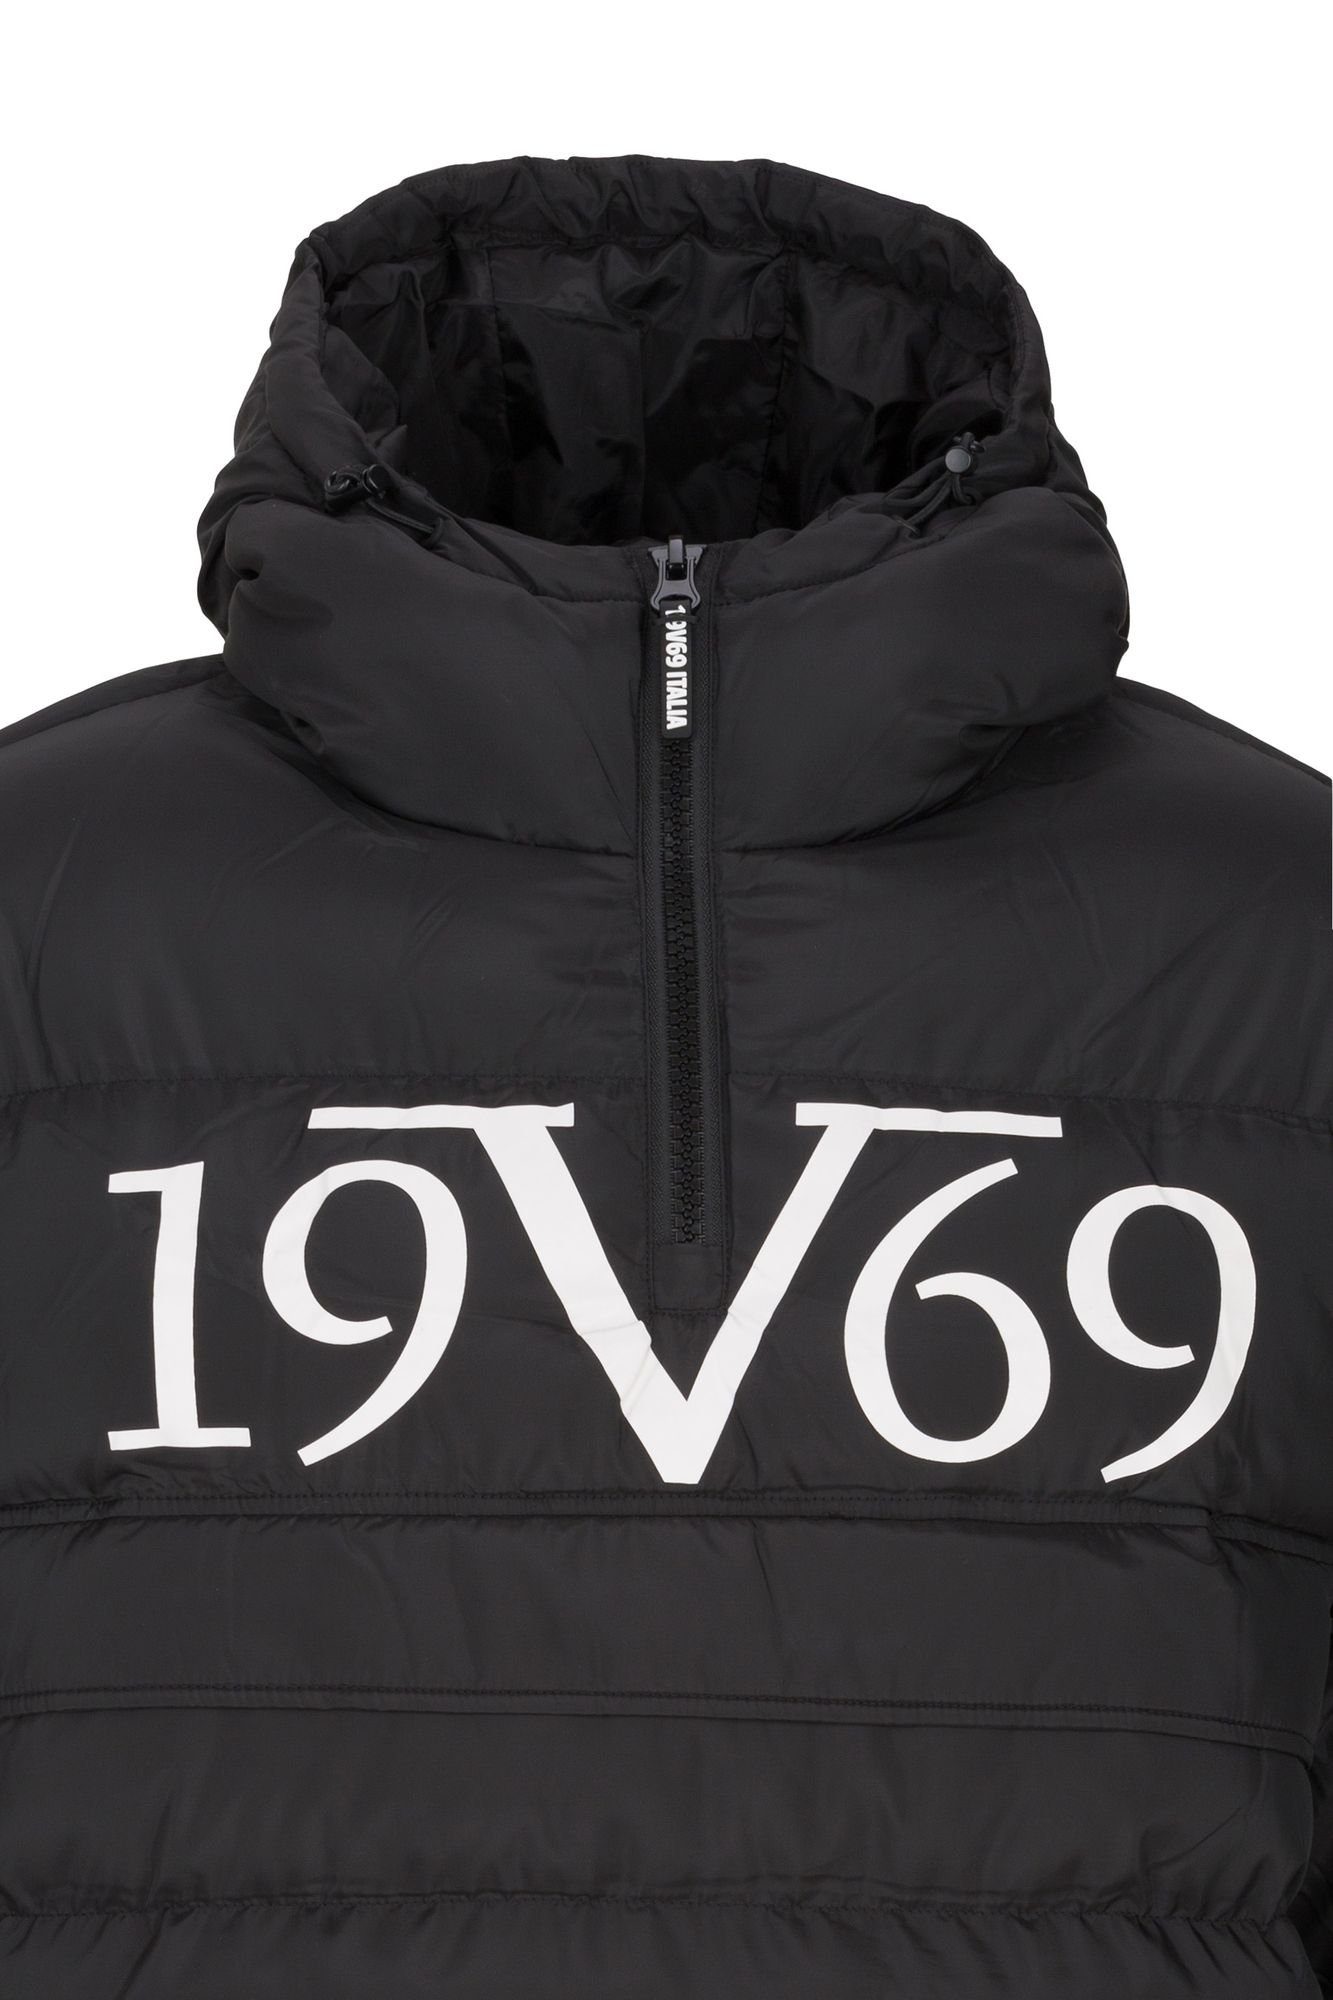 Versace SRL - 19V69 by Italia Sportivo Jordan by Winterjacke Versace